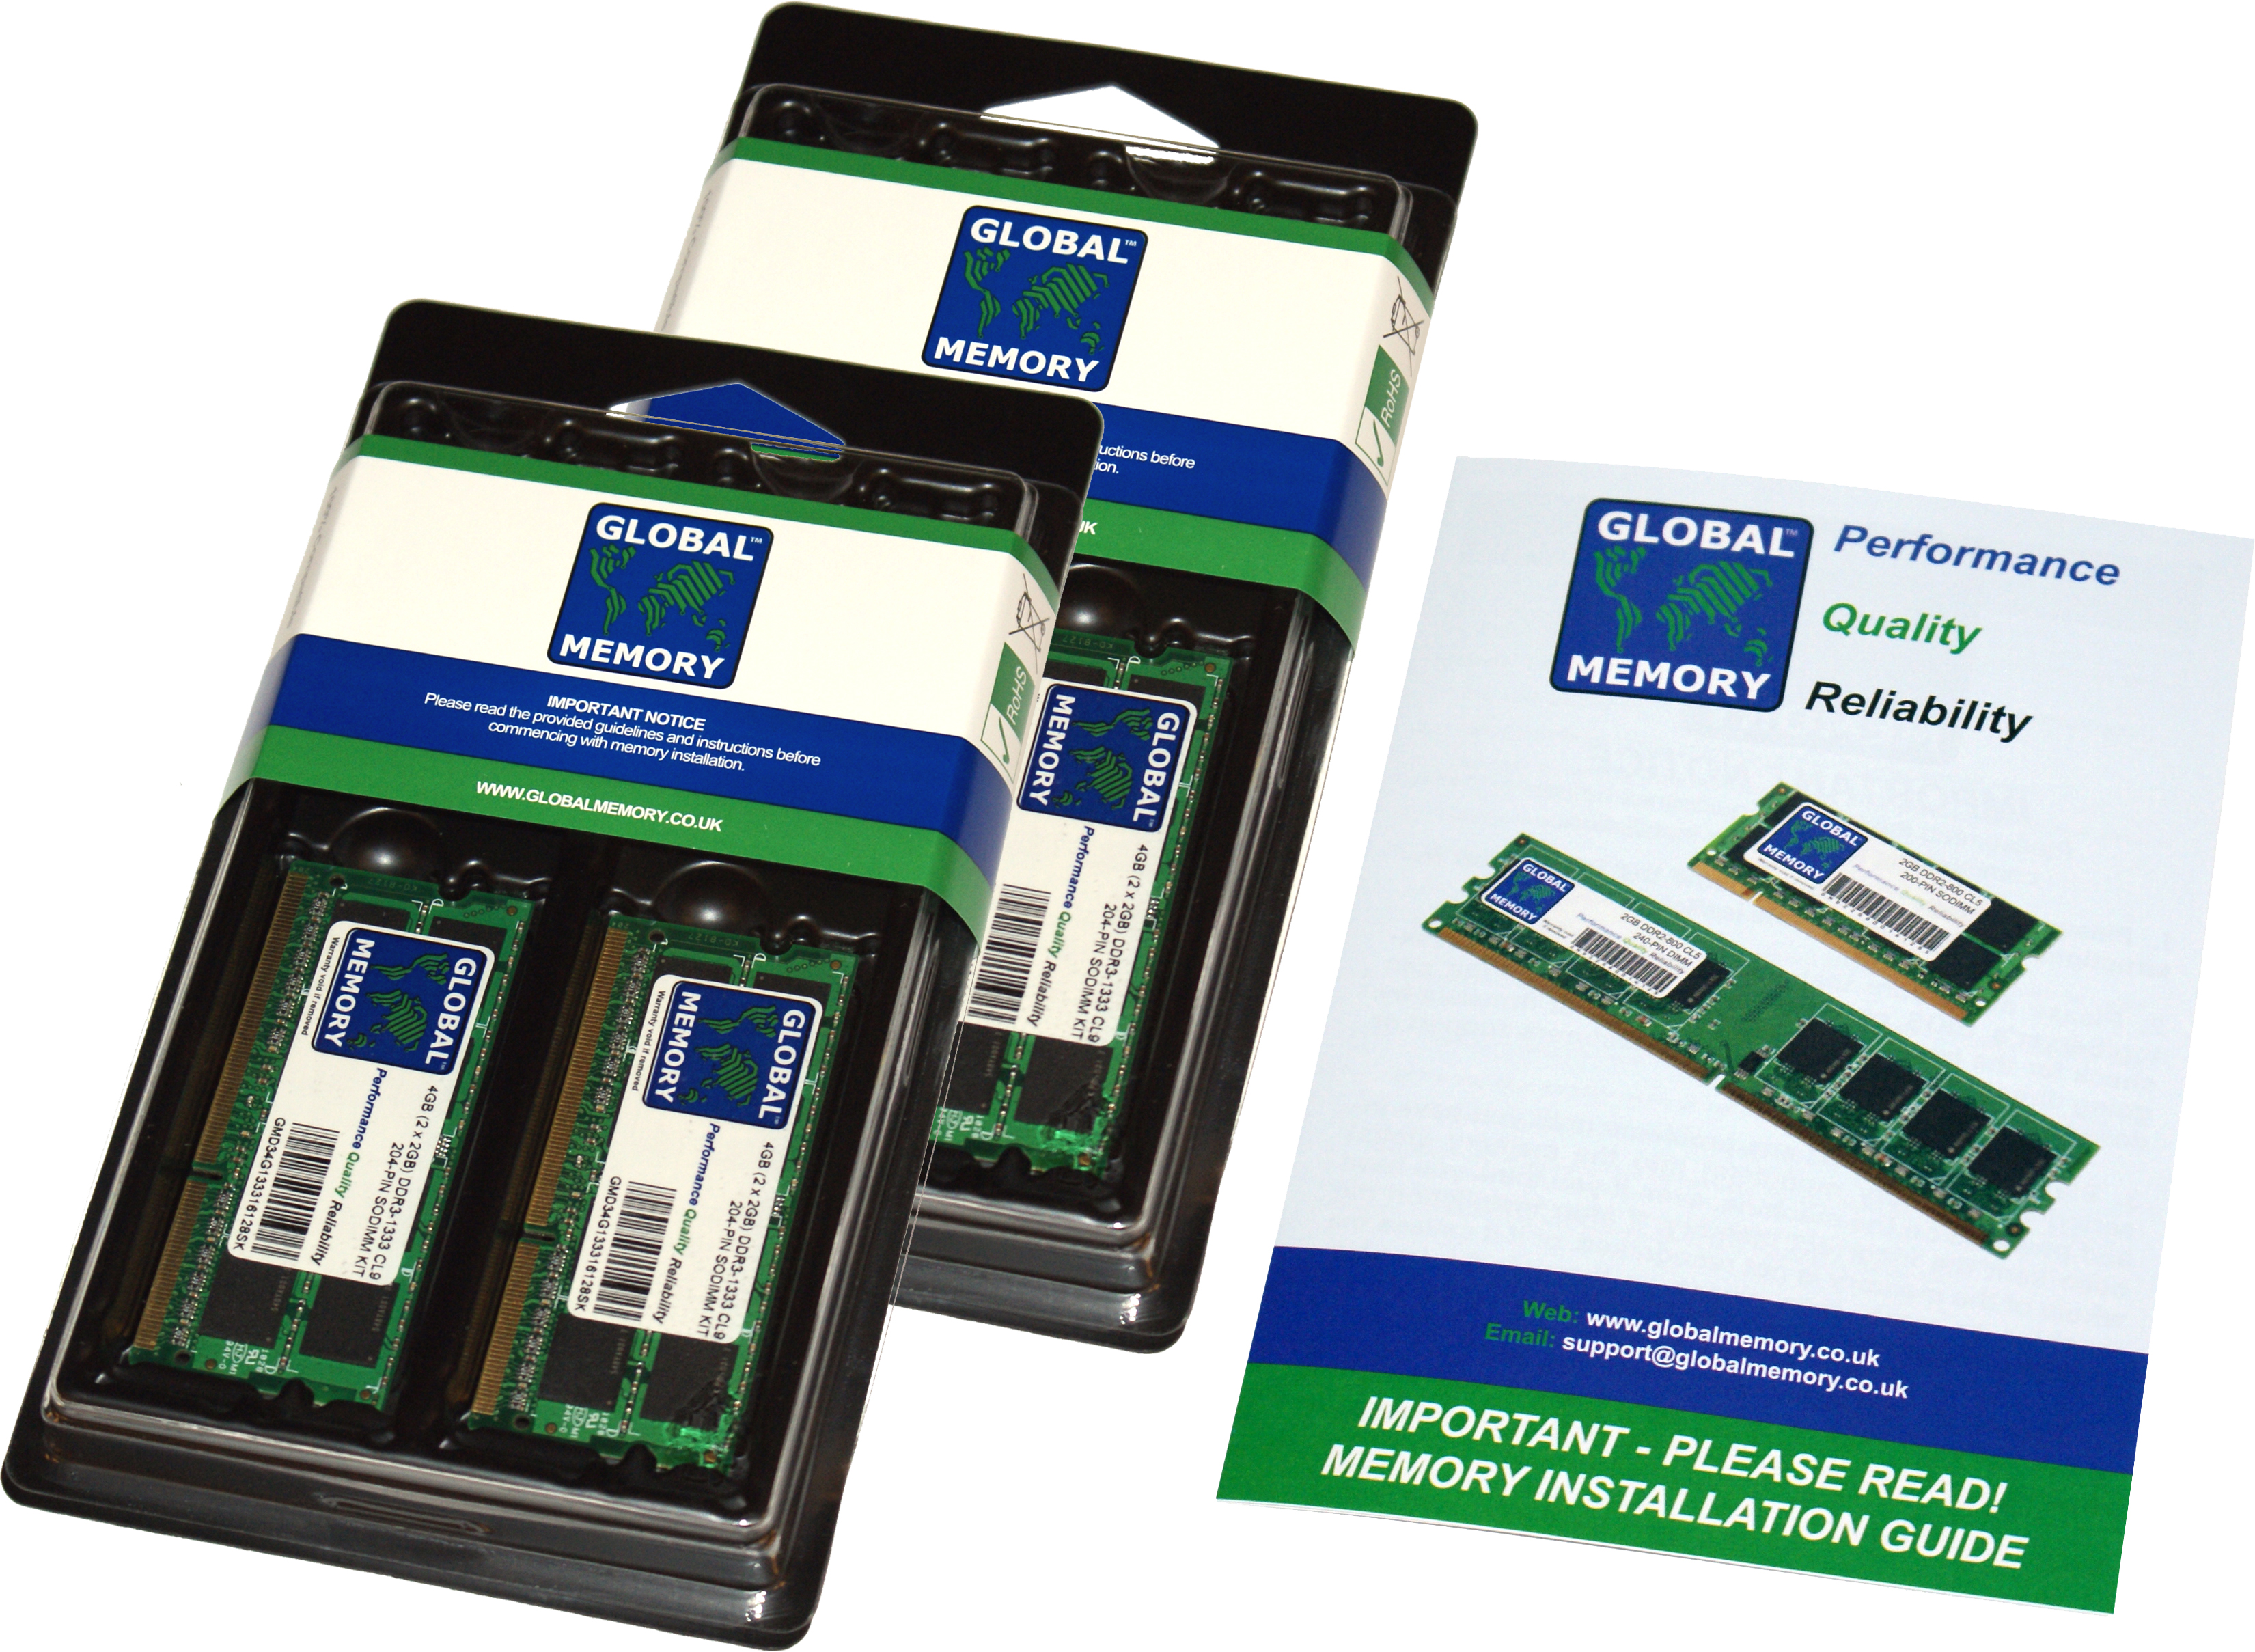 64GB (4 x 16GB) DDR3 1866MHz PC3-14900 204-PIN SODIMM MEMORY RAM KIT FOR LAPTOPS/NOTEBOOKS